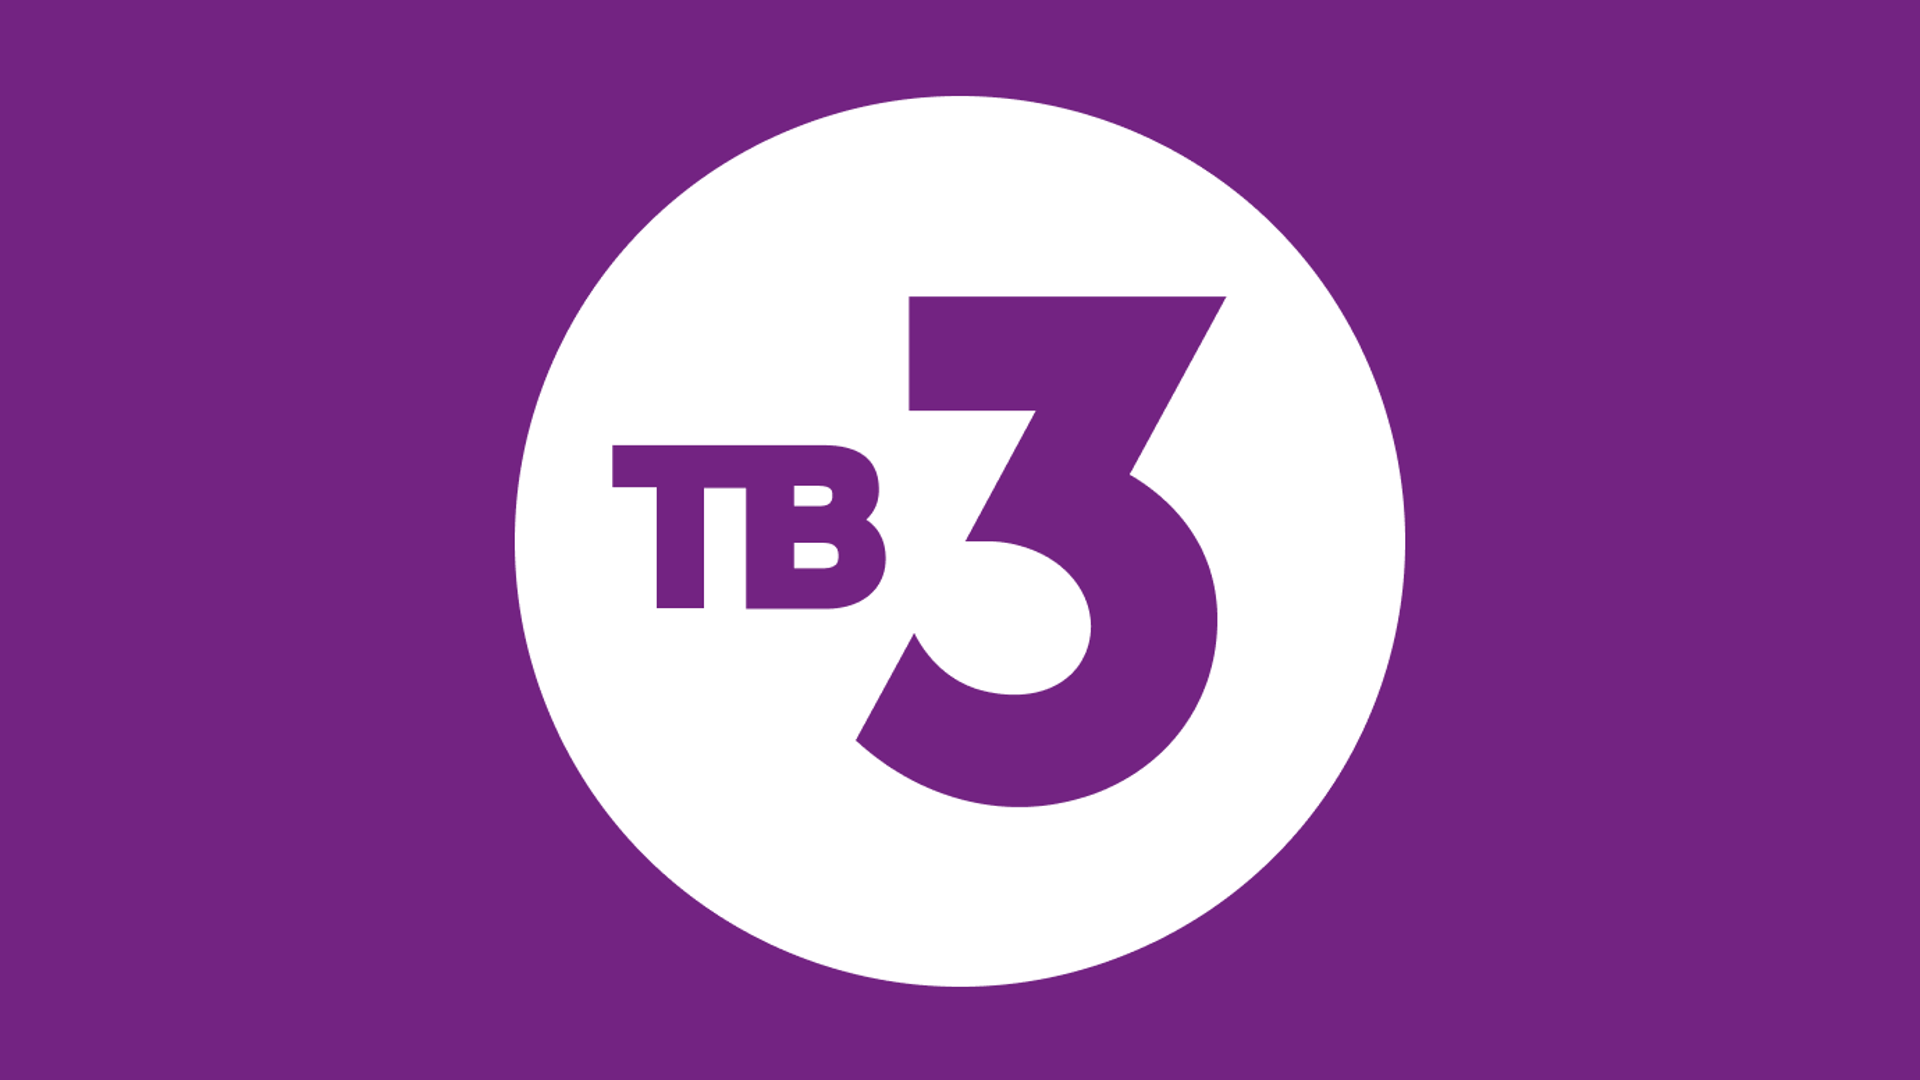 Тв3 Телеканал логотип. Канал тв3. ТВ 3 эмблема. Эмблема канала тв3.